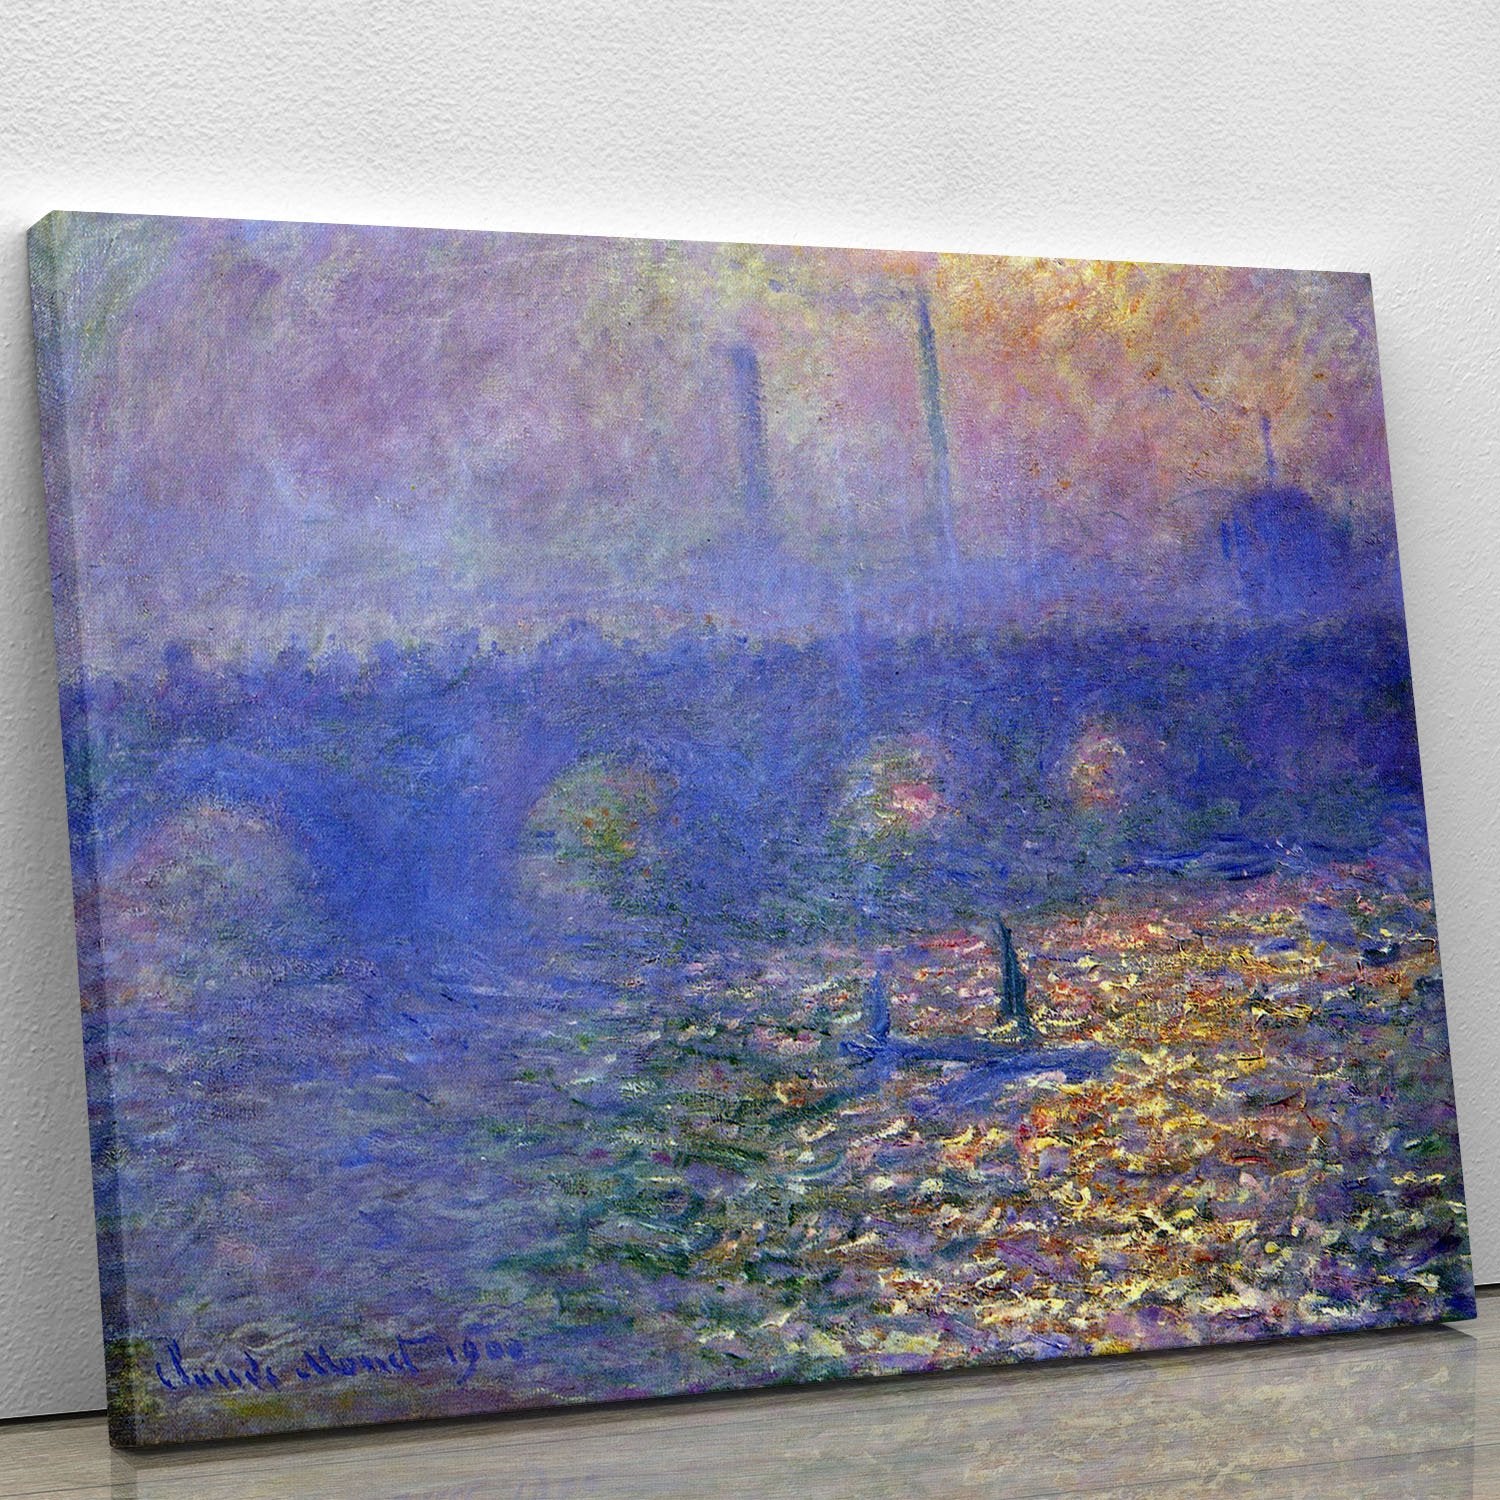 Waterloo Bridge by Monet Canvas Print or Poster